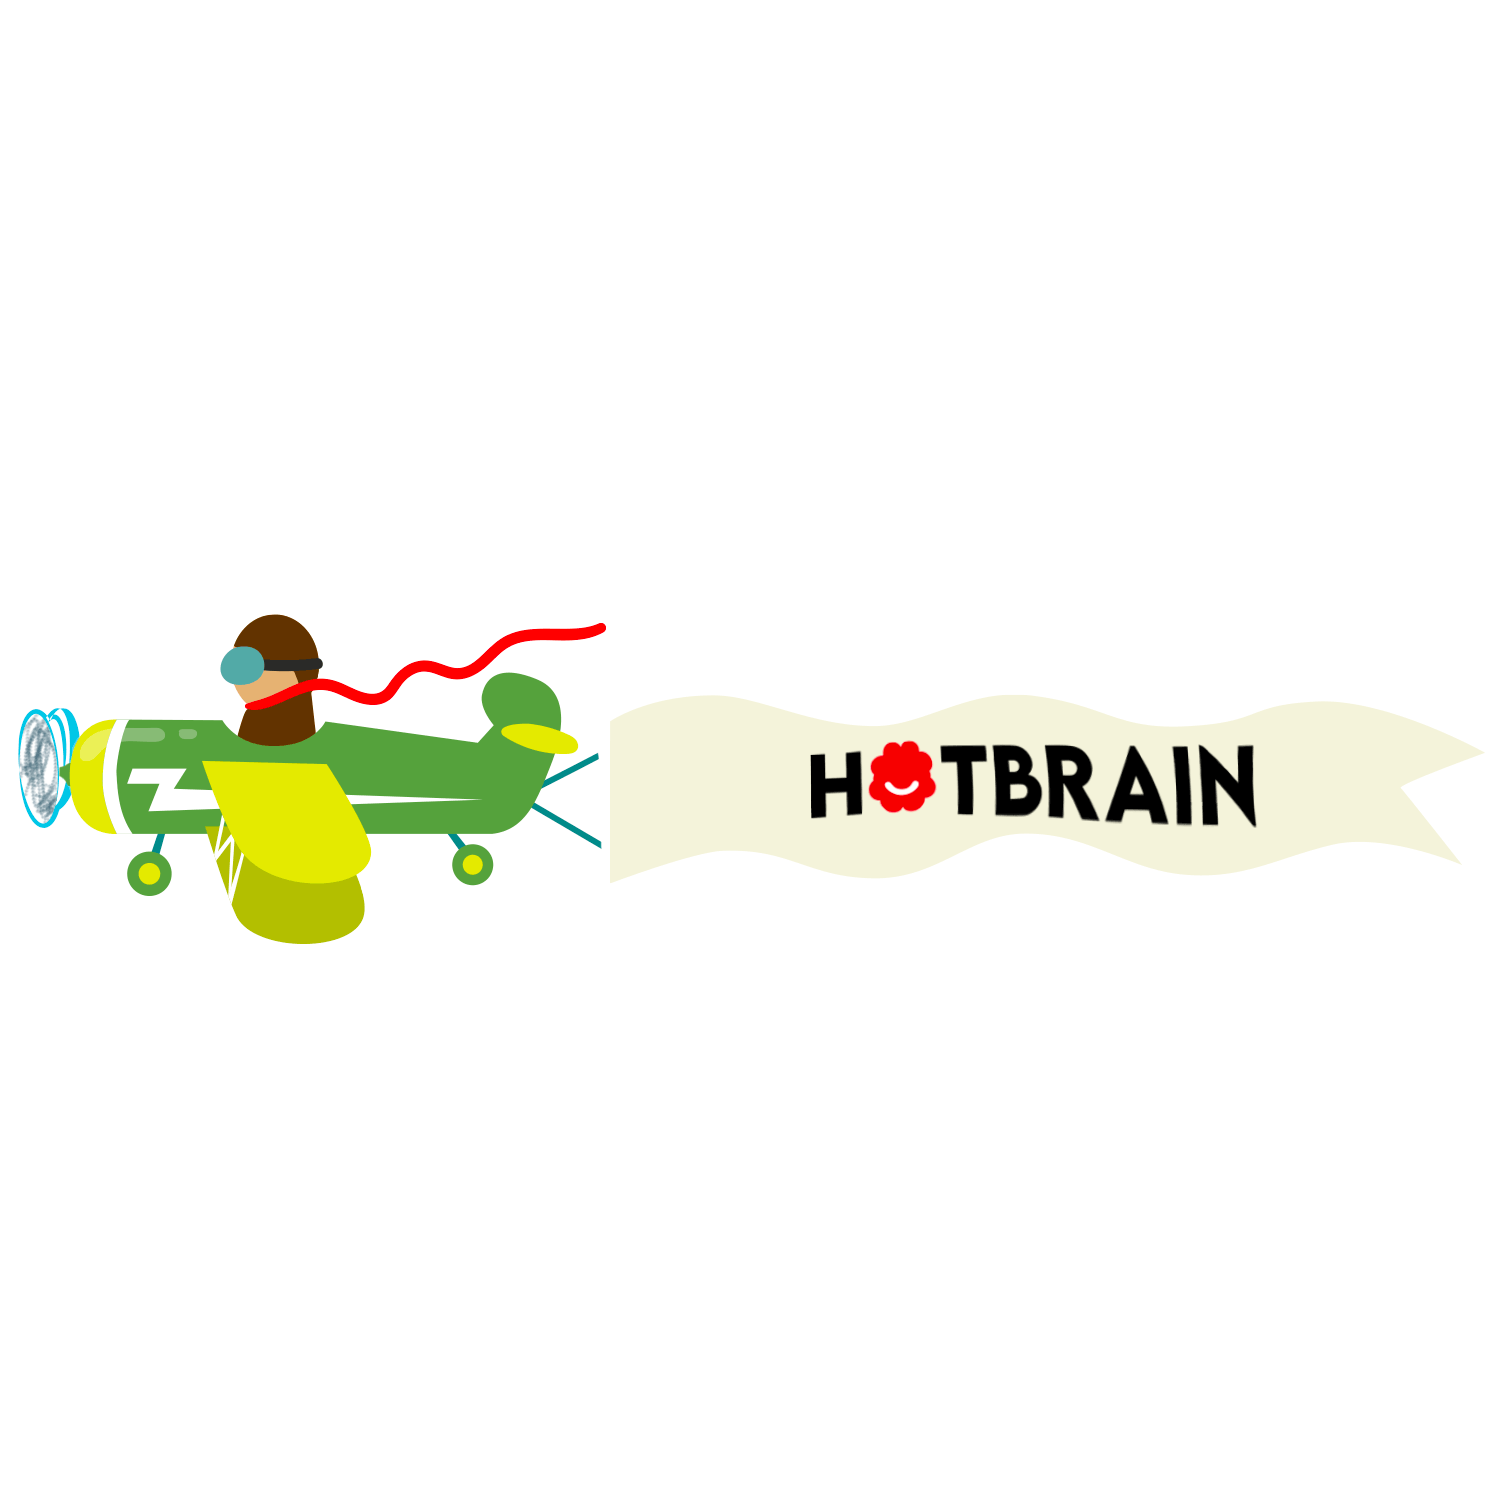 Hotbrain